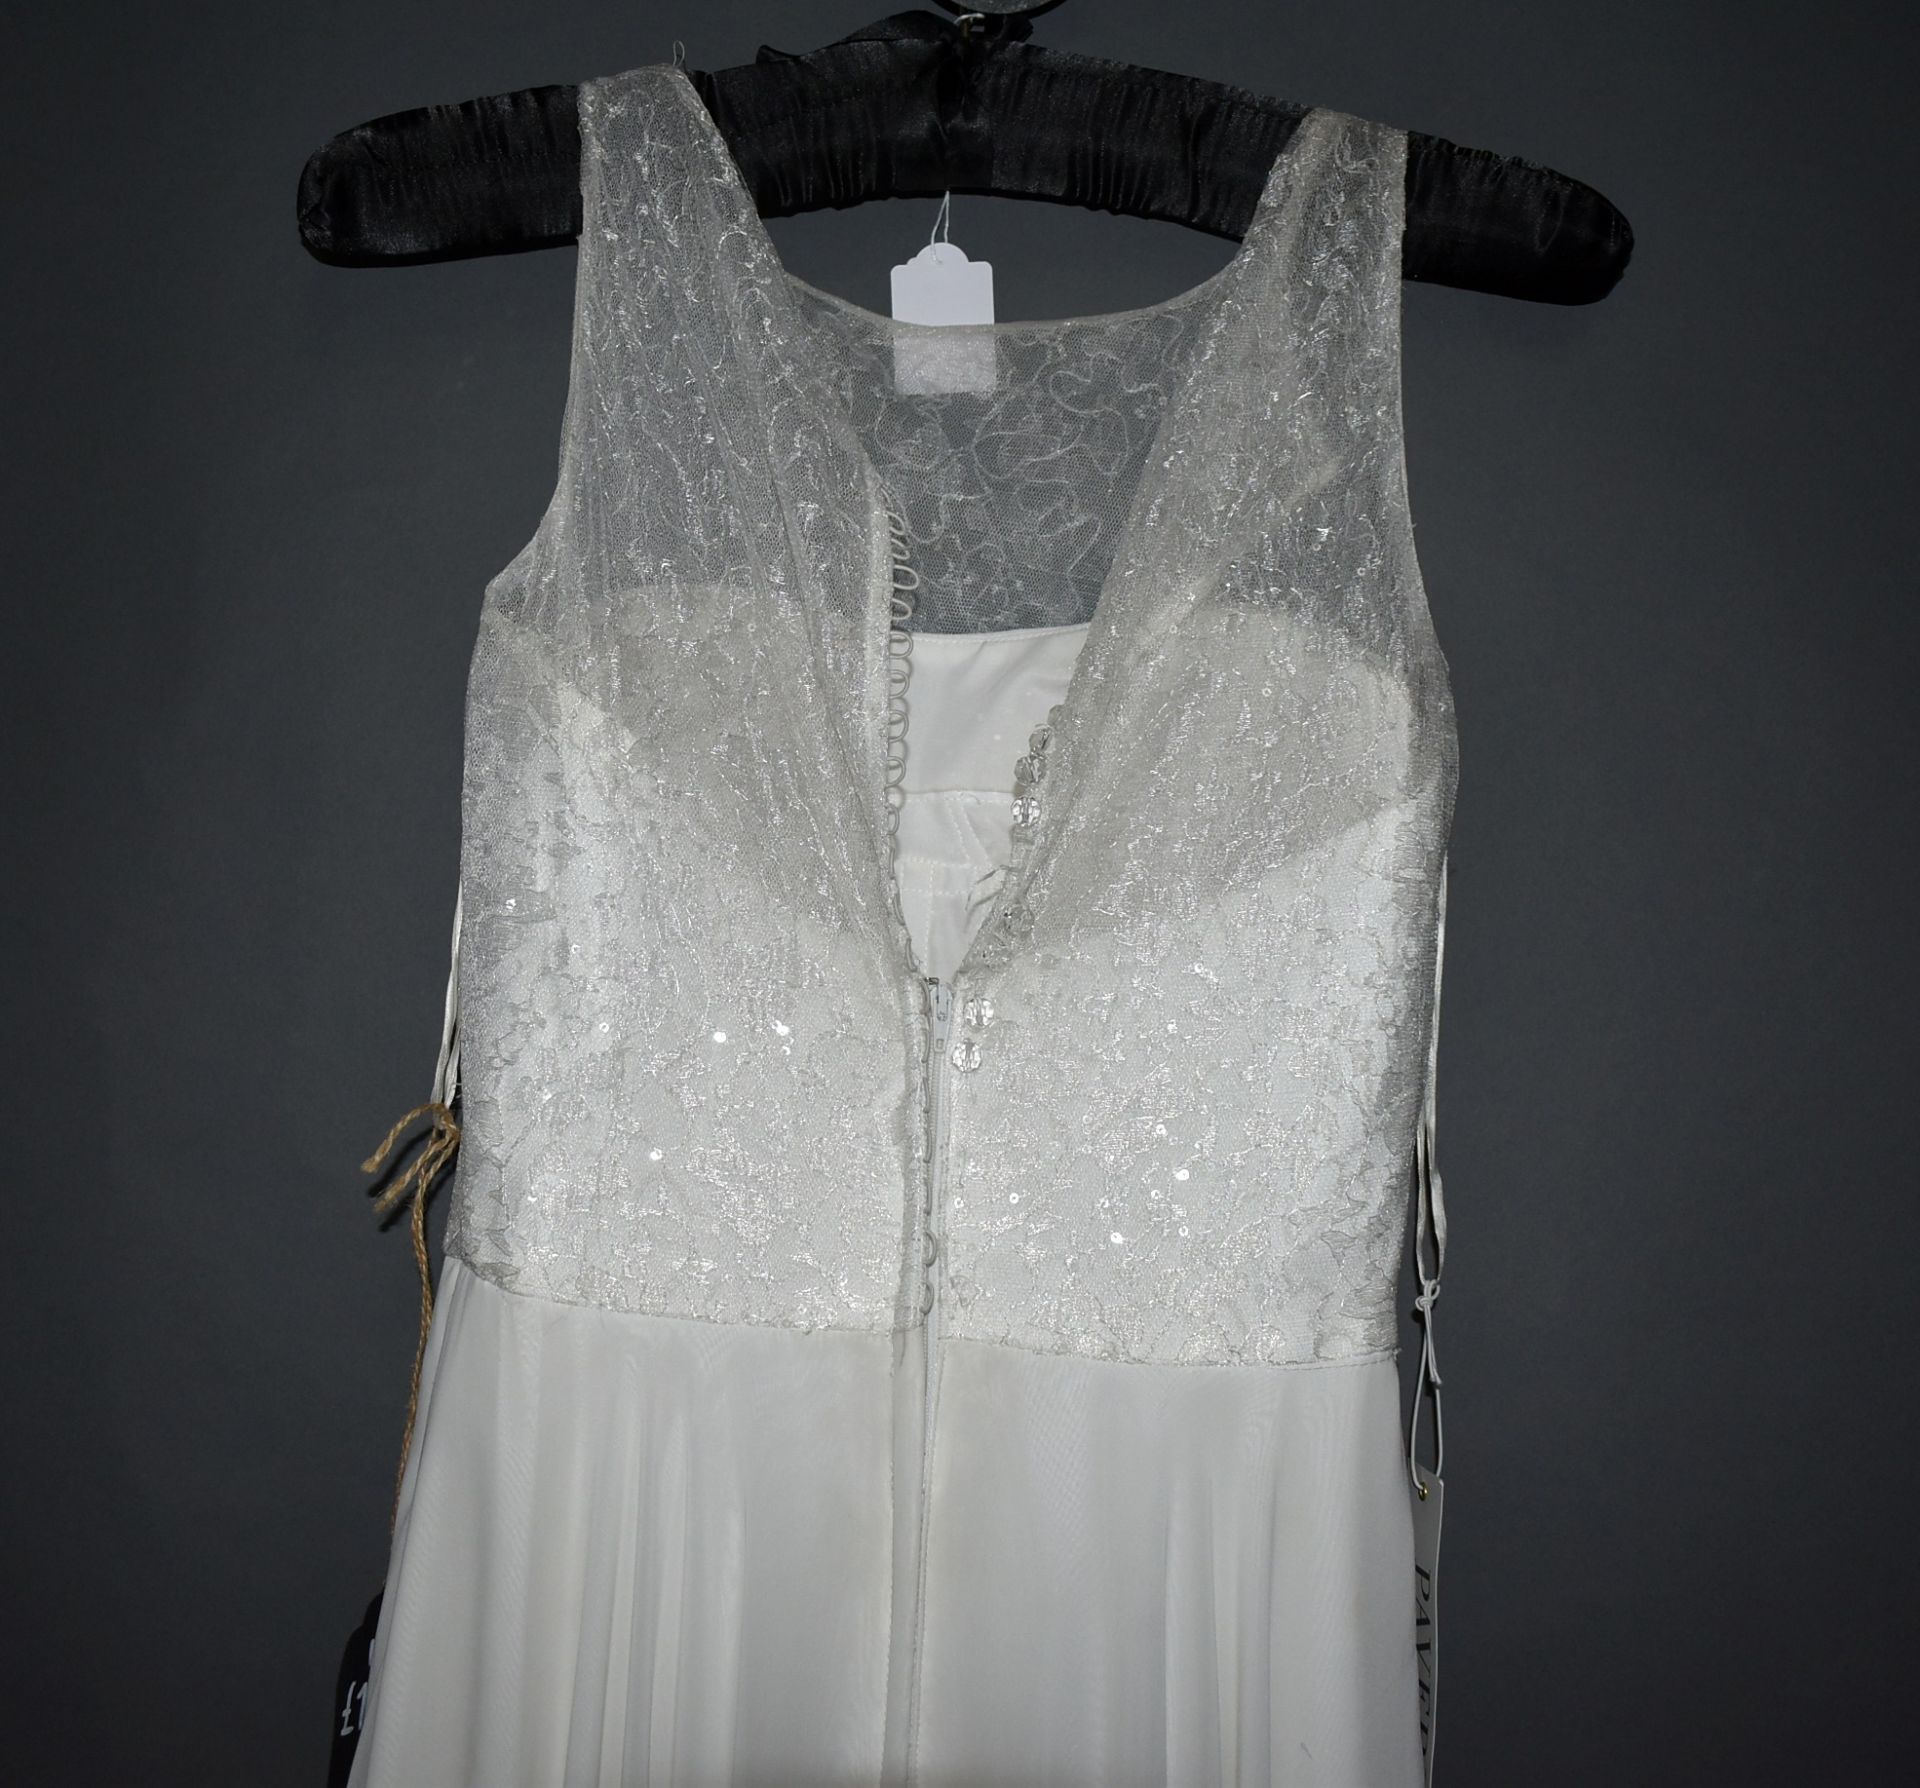 1 x WHITE ROSE Chiffon And Lace Overlay Designer Wedding Dress Bridal Gown RRP £1,050 UK 12 - Image 4 of 4